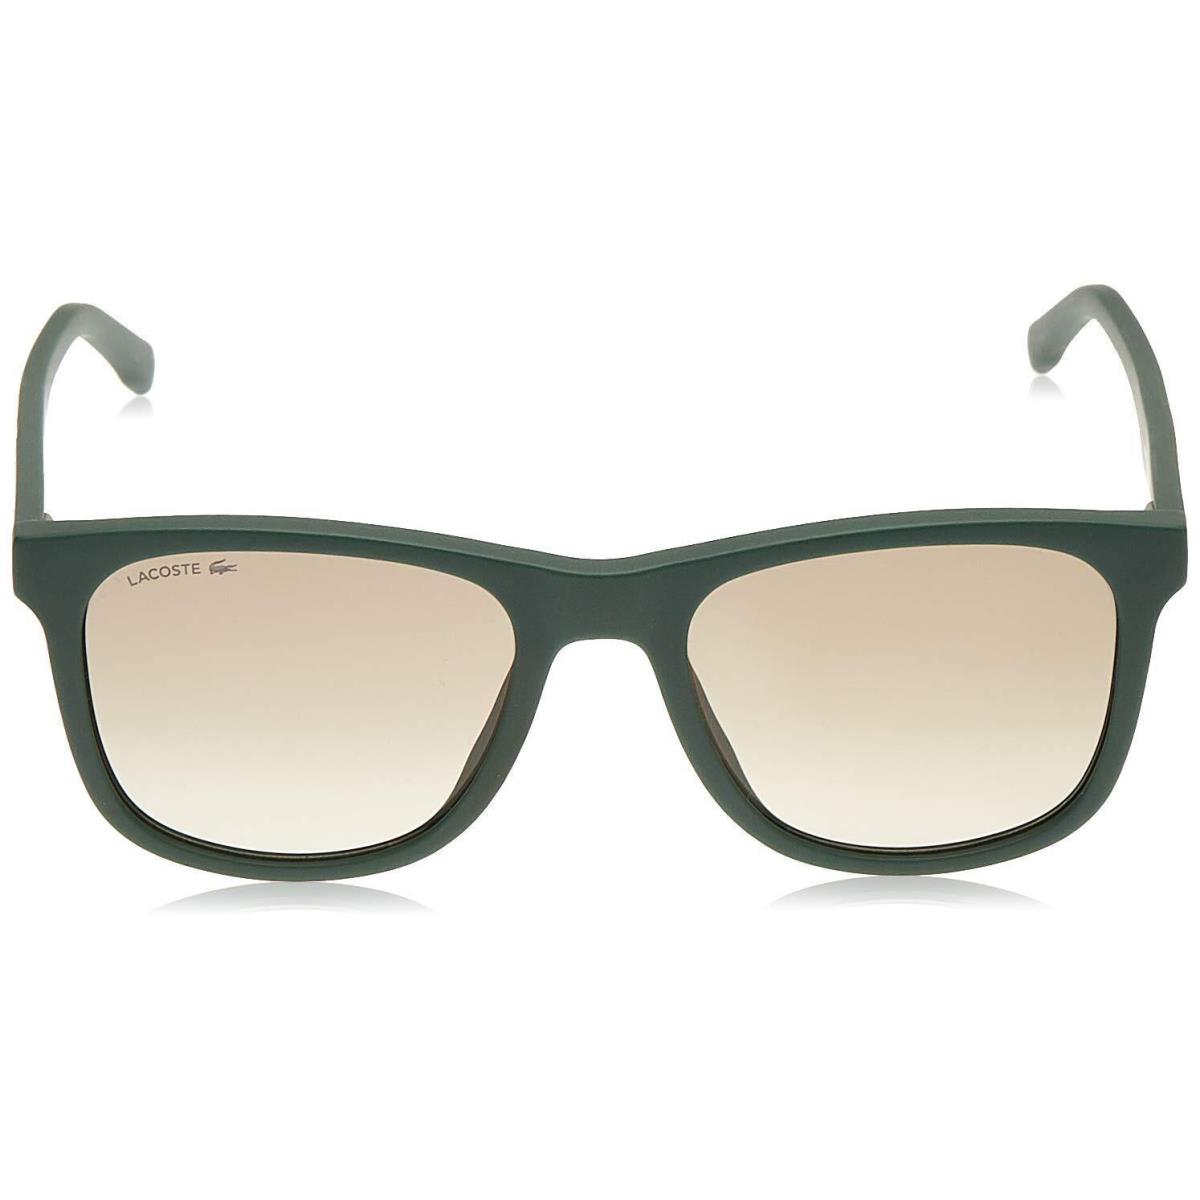 Lacoste L929SE 315 Matte Green Sunglasses with Green Lenses 53/19/145